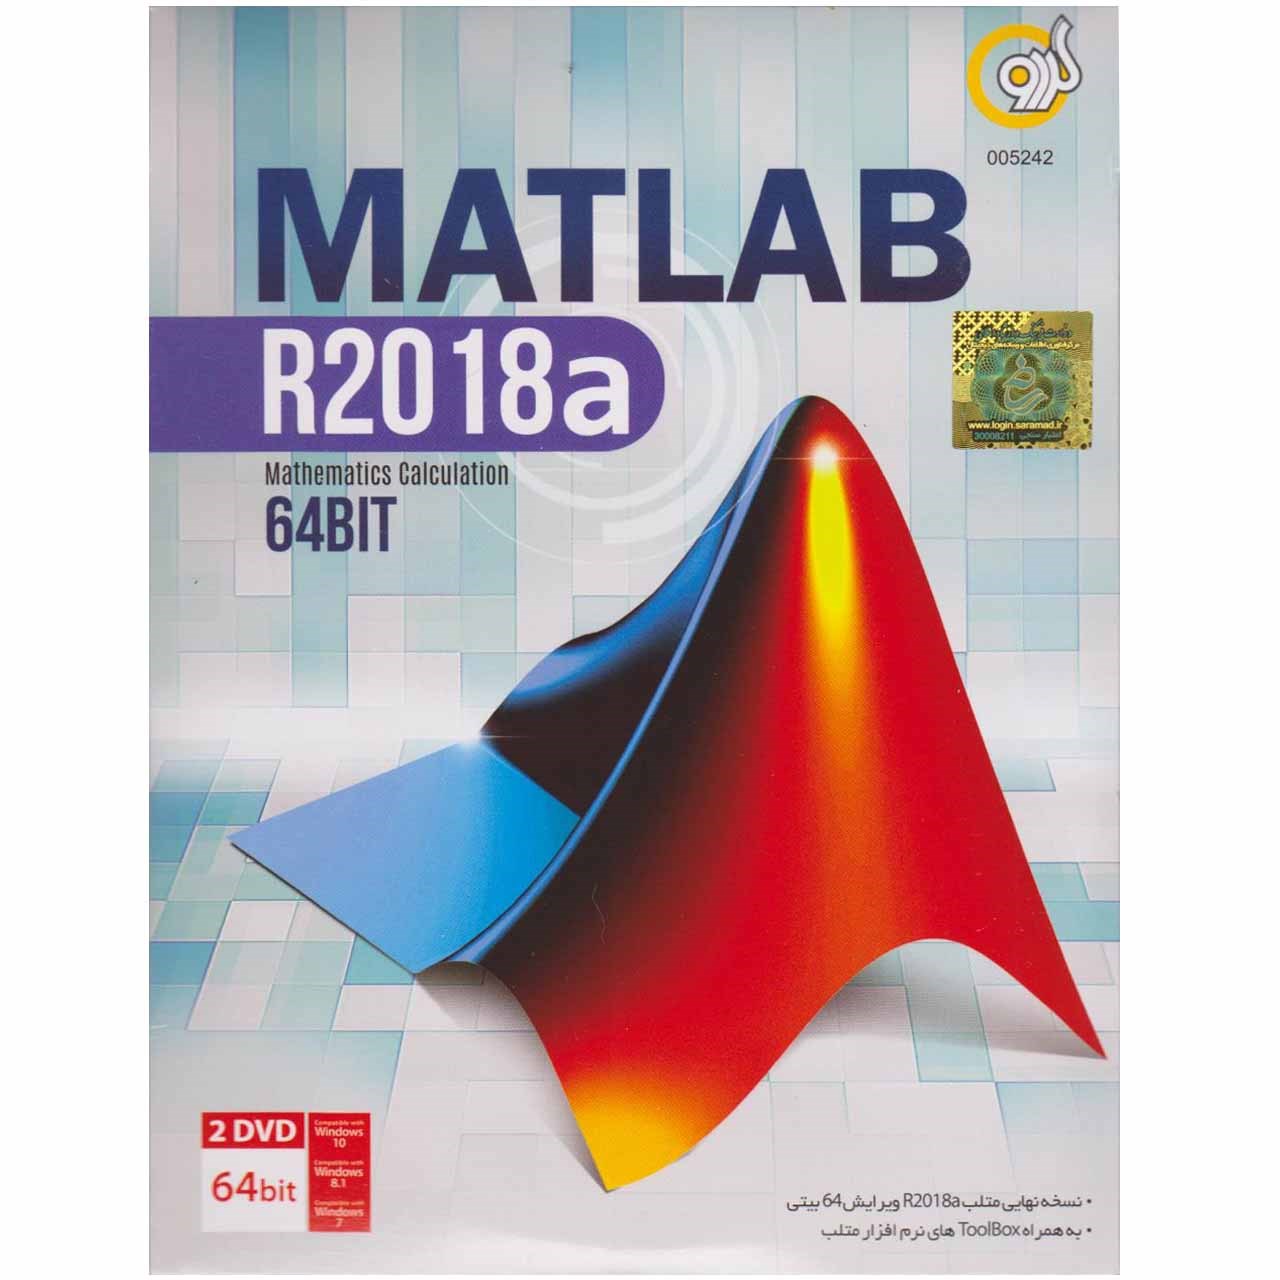 نرم افزار  Matlab R2018a 64Bit  نشرگردو